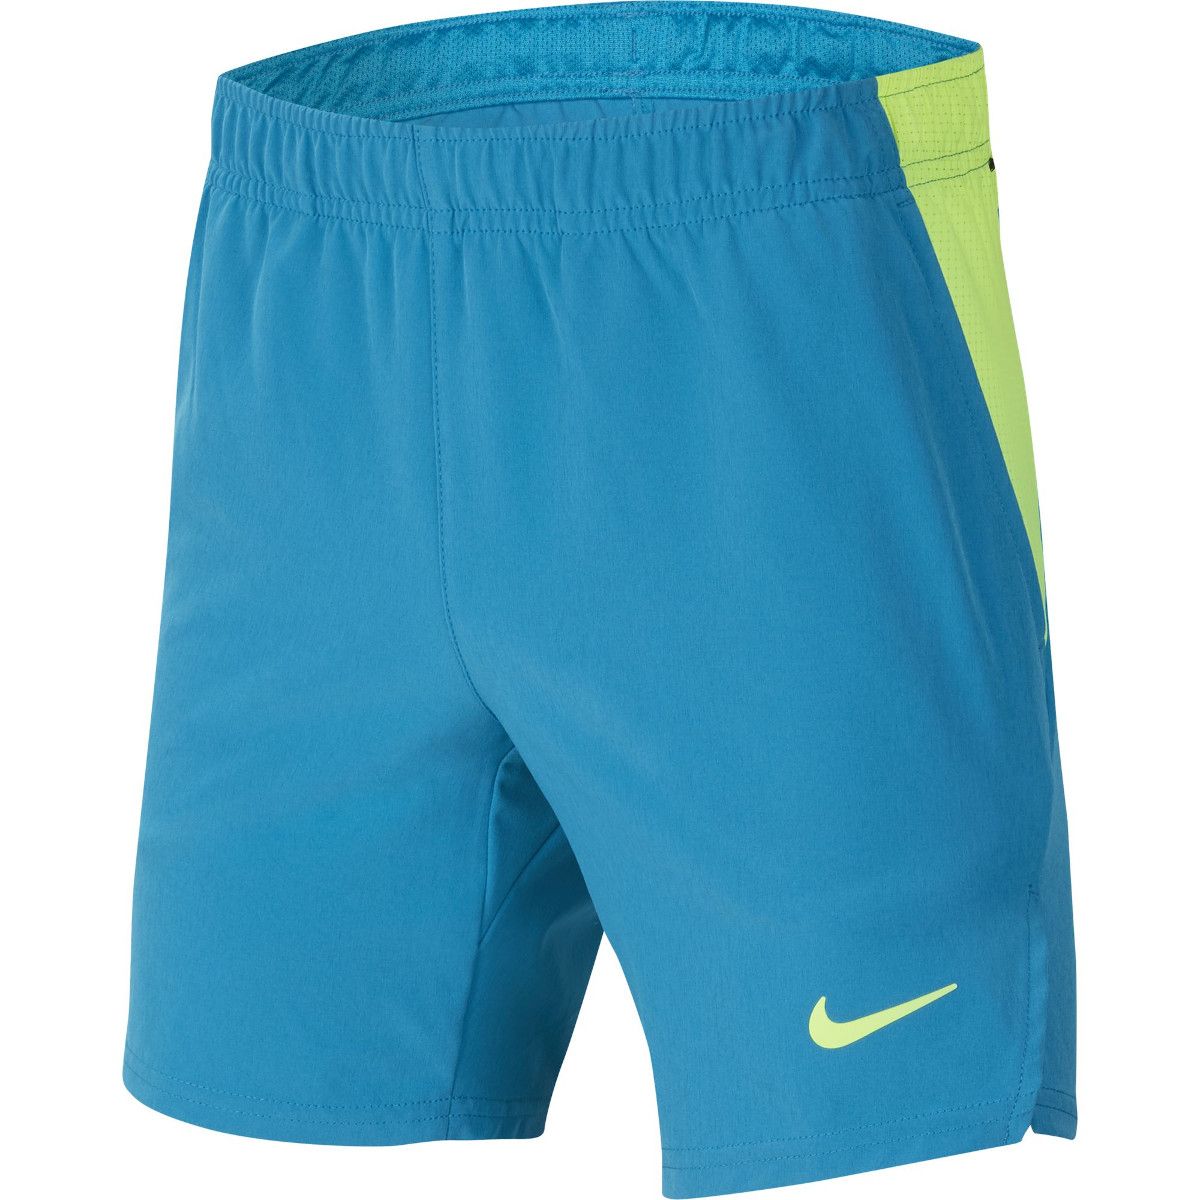 NikeCourt Flex Ace Boy's Tennis Shorts CI9409-425